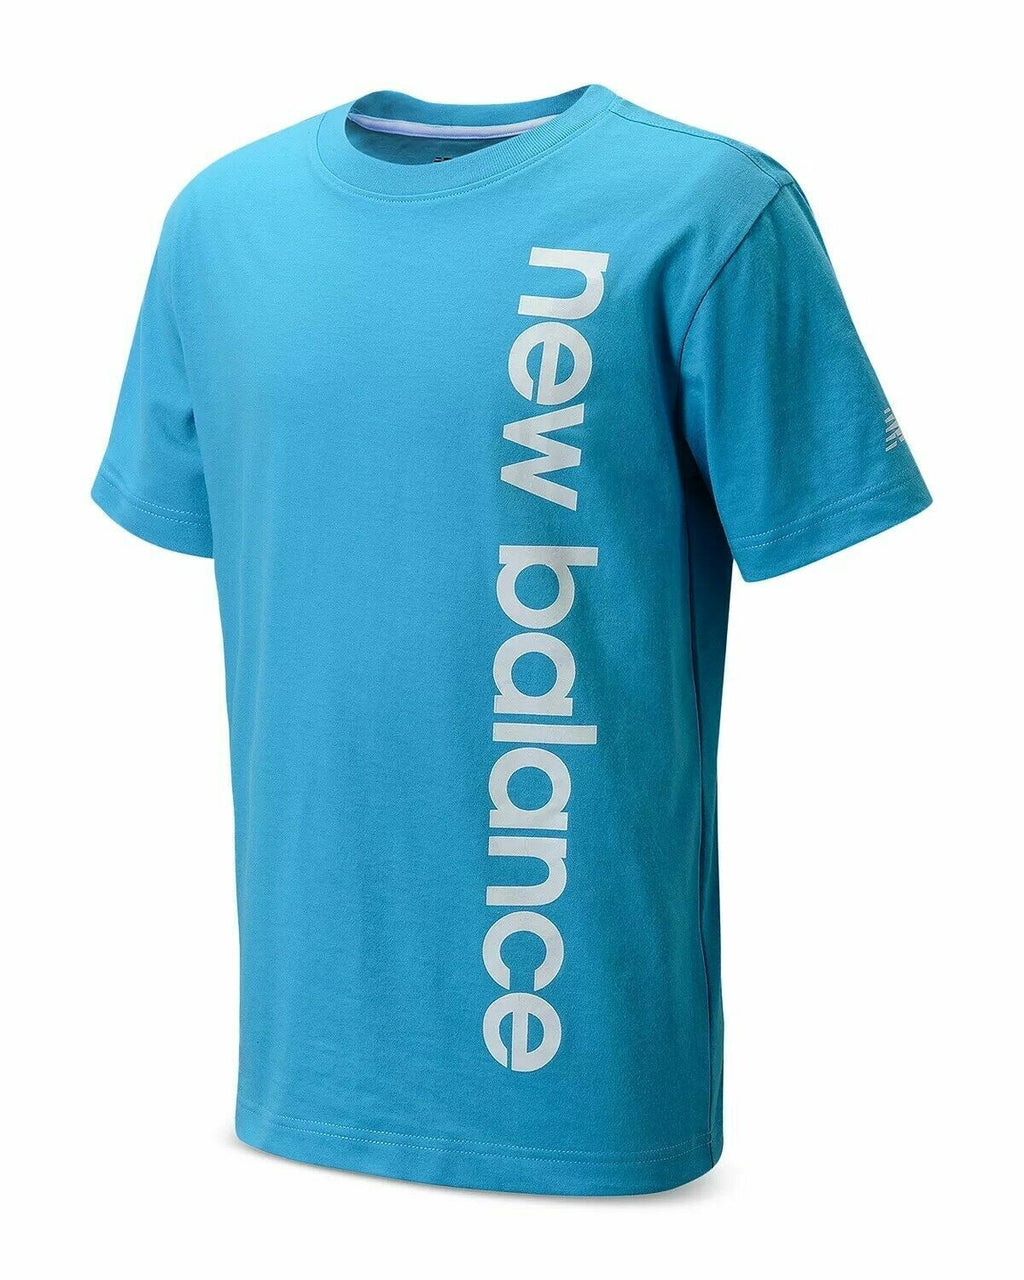 New Balance Tee T-Shirt